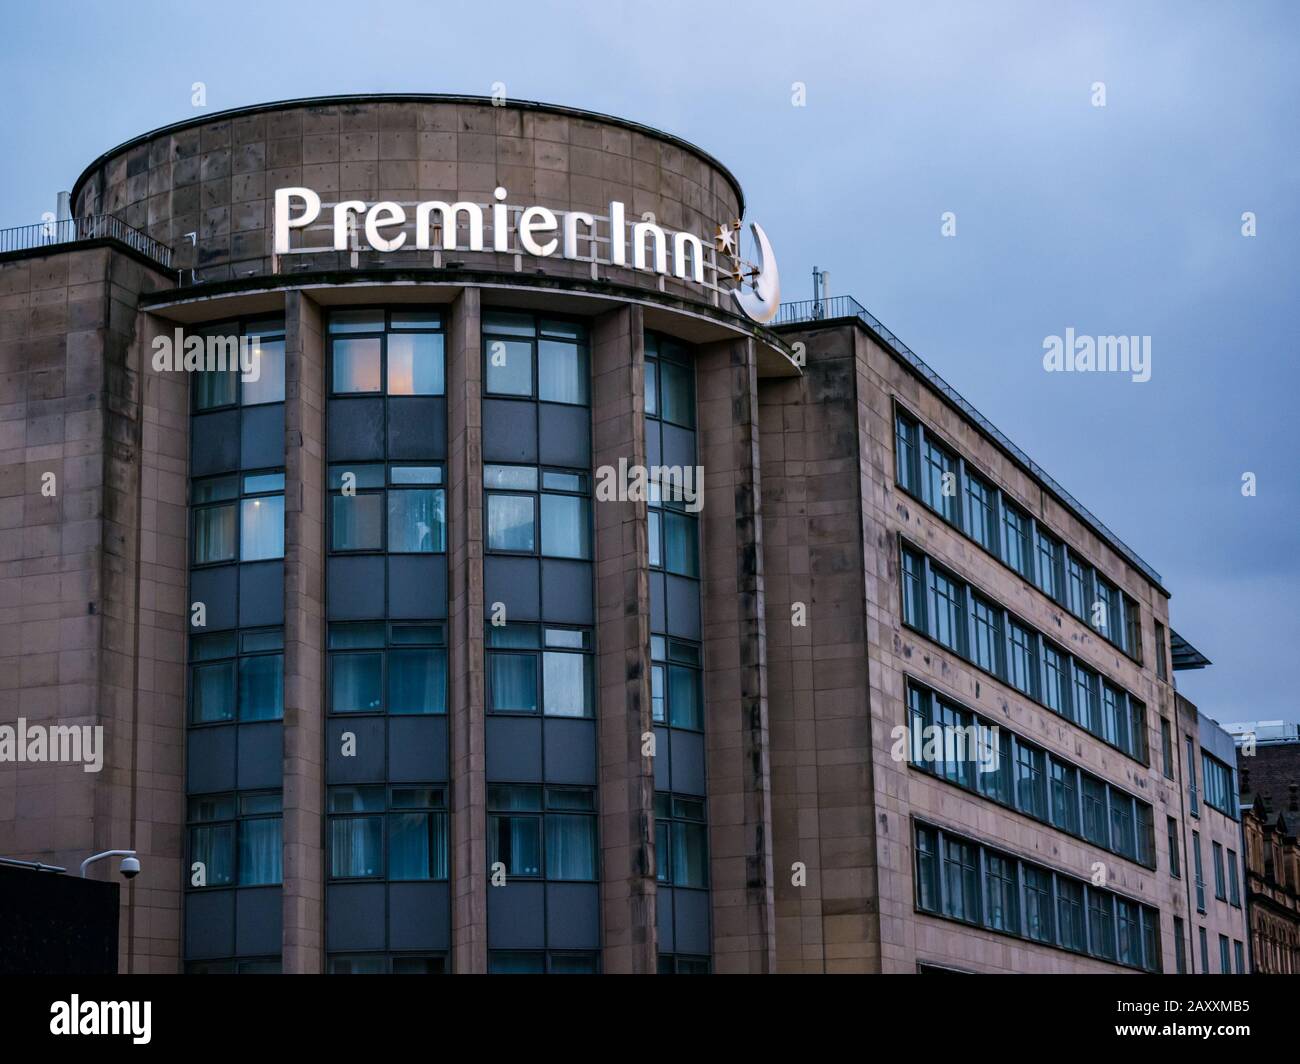 Premier Inn lit neon name sign at dusk, George Street, Glasgow, Scotland, UK Stock Photo